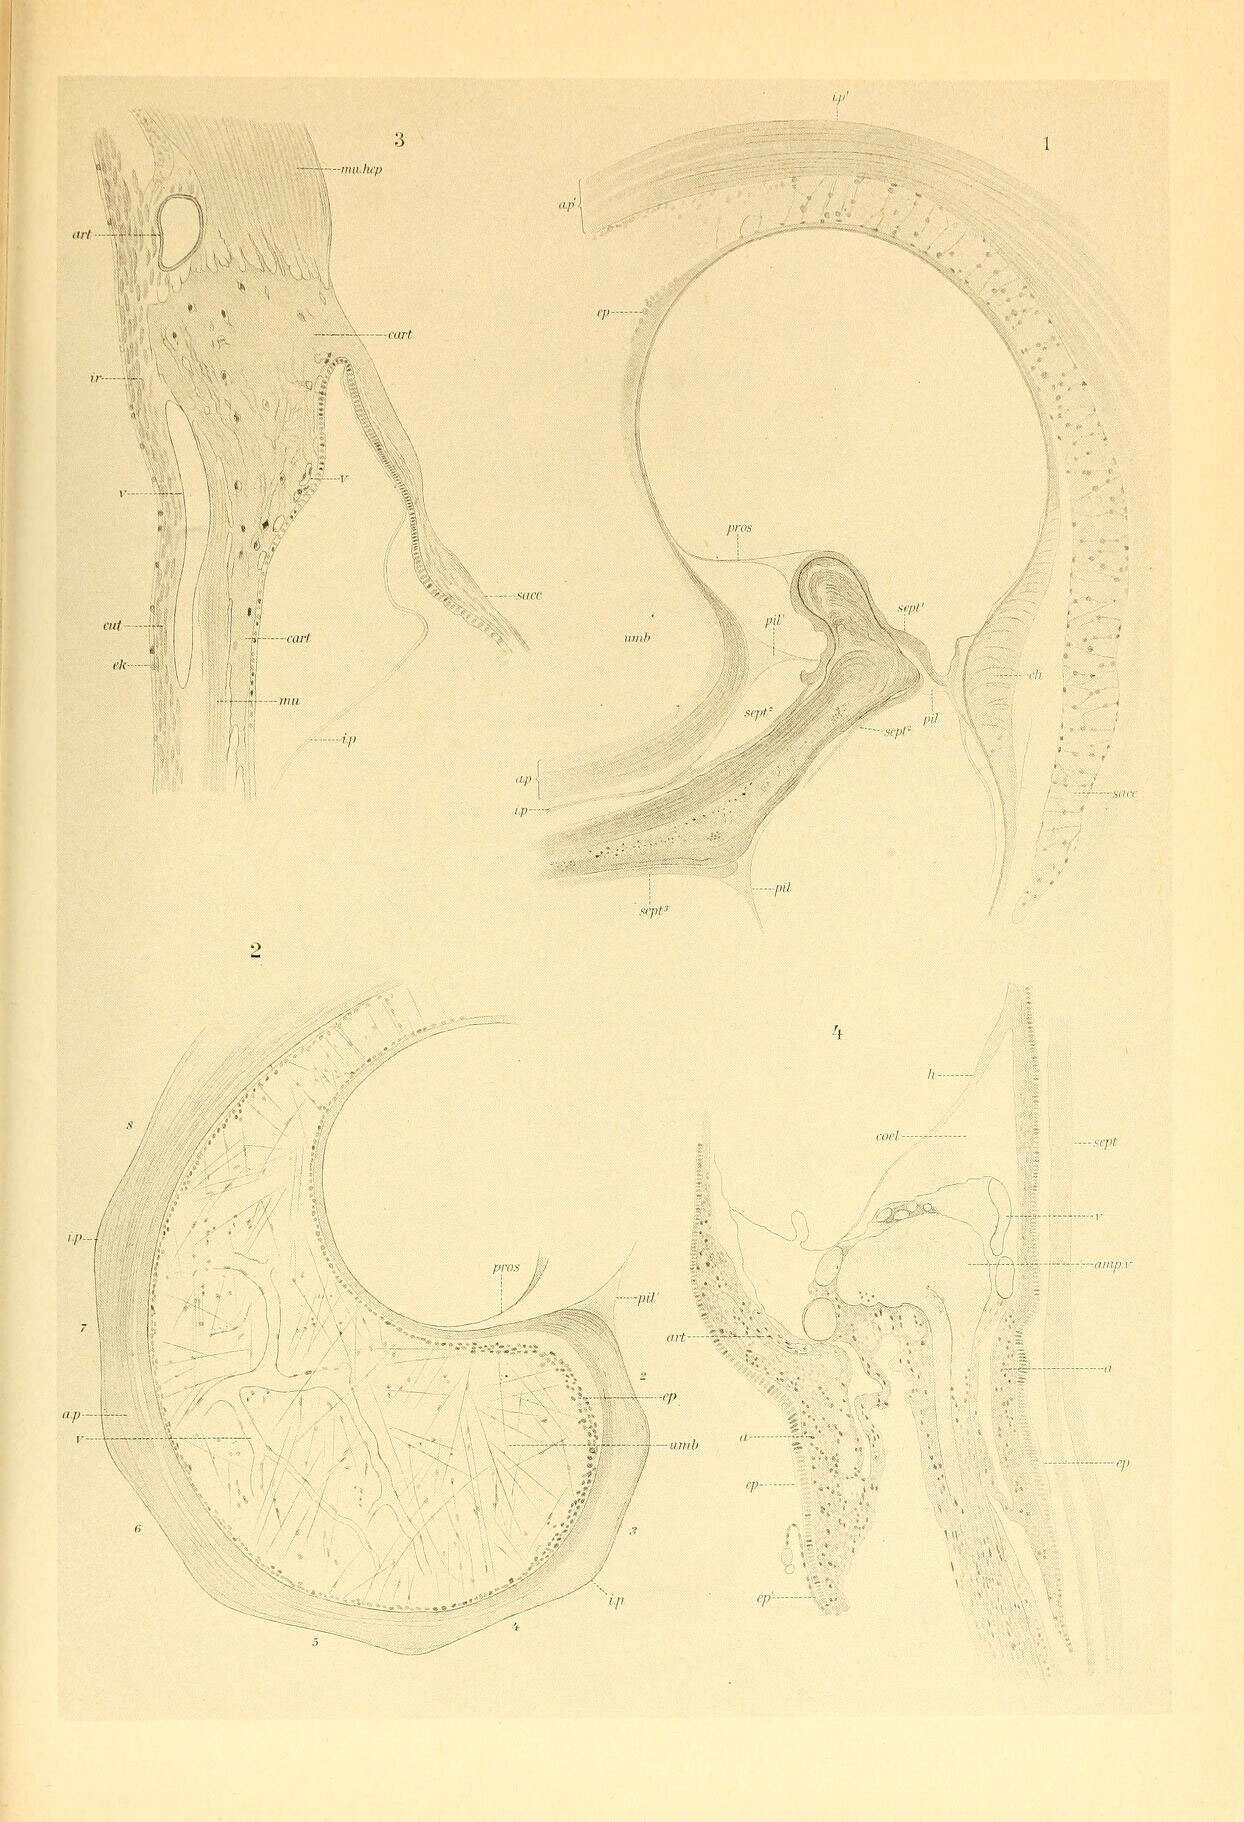 Image of Spiruloidea Rafinesque 1815